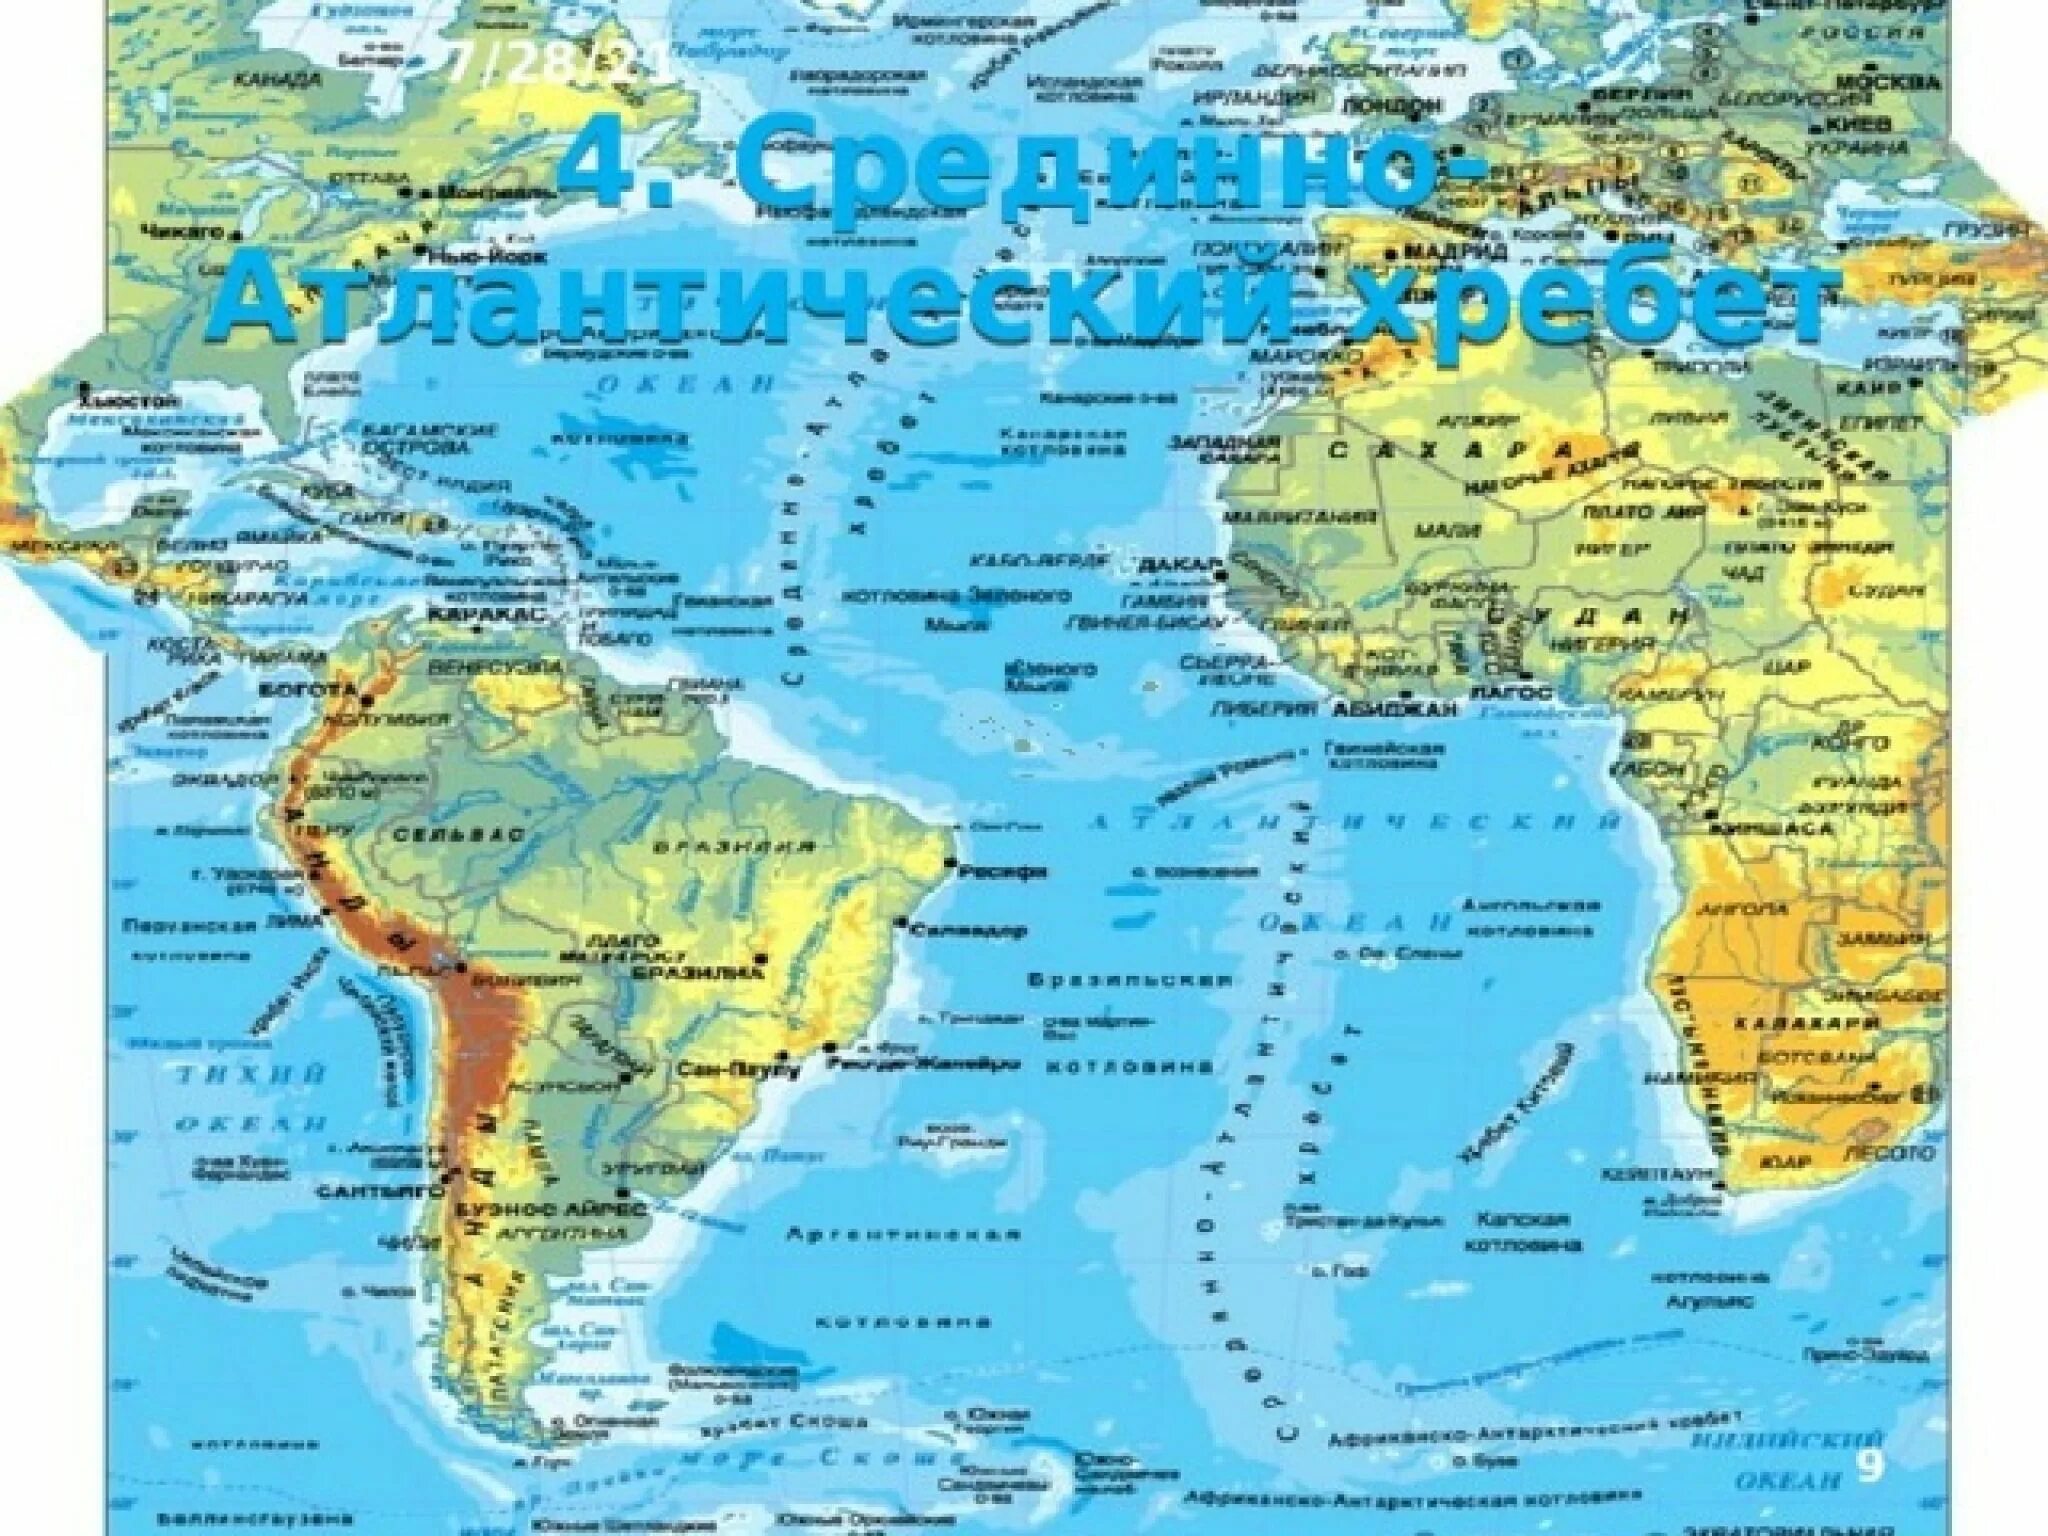 Северо Атлантический хребет на карте Атлантического океана. Хребты Атлантического океана на карте. Хребты Атлантического океана на физической карте. Атлантический океан какие полушария